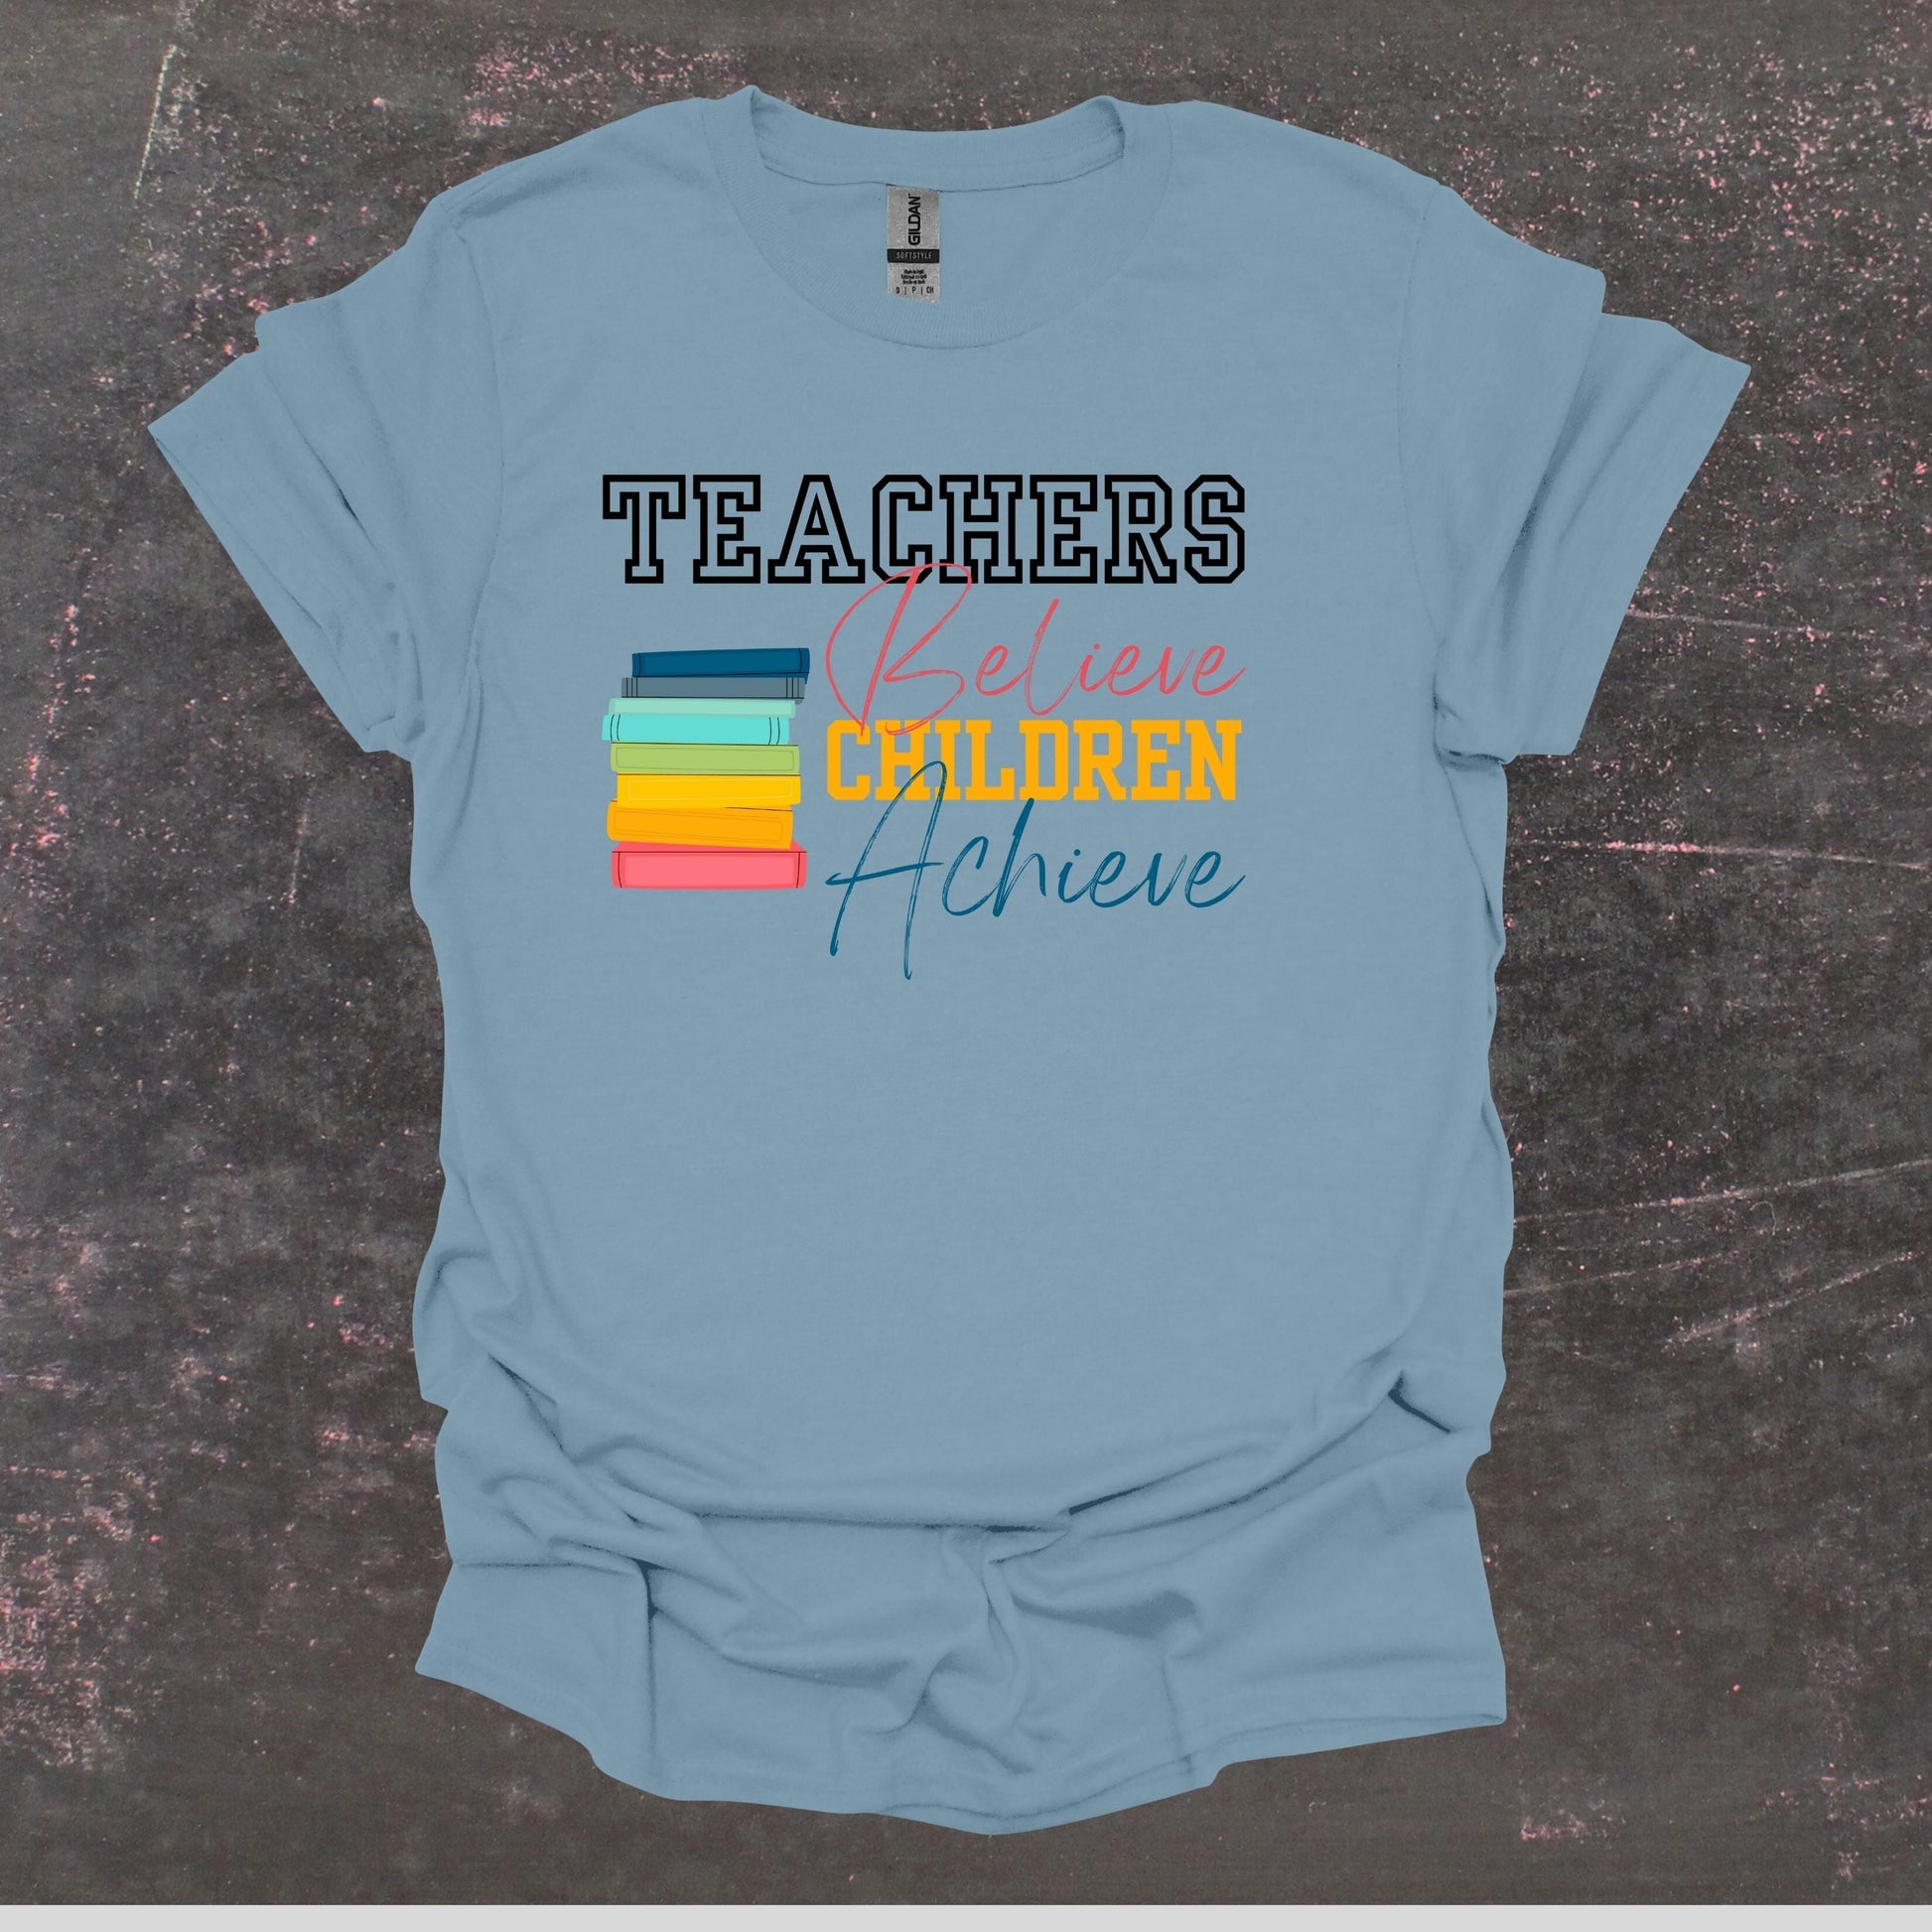 Teachers Believe Children Achieve - Teacher T Shirt - Adult Tee Shirts T-Shirts Graphic Avenue Stone Blue Adult Small 